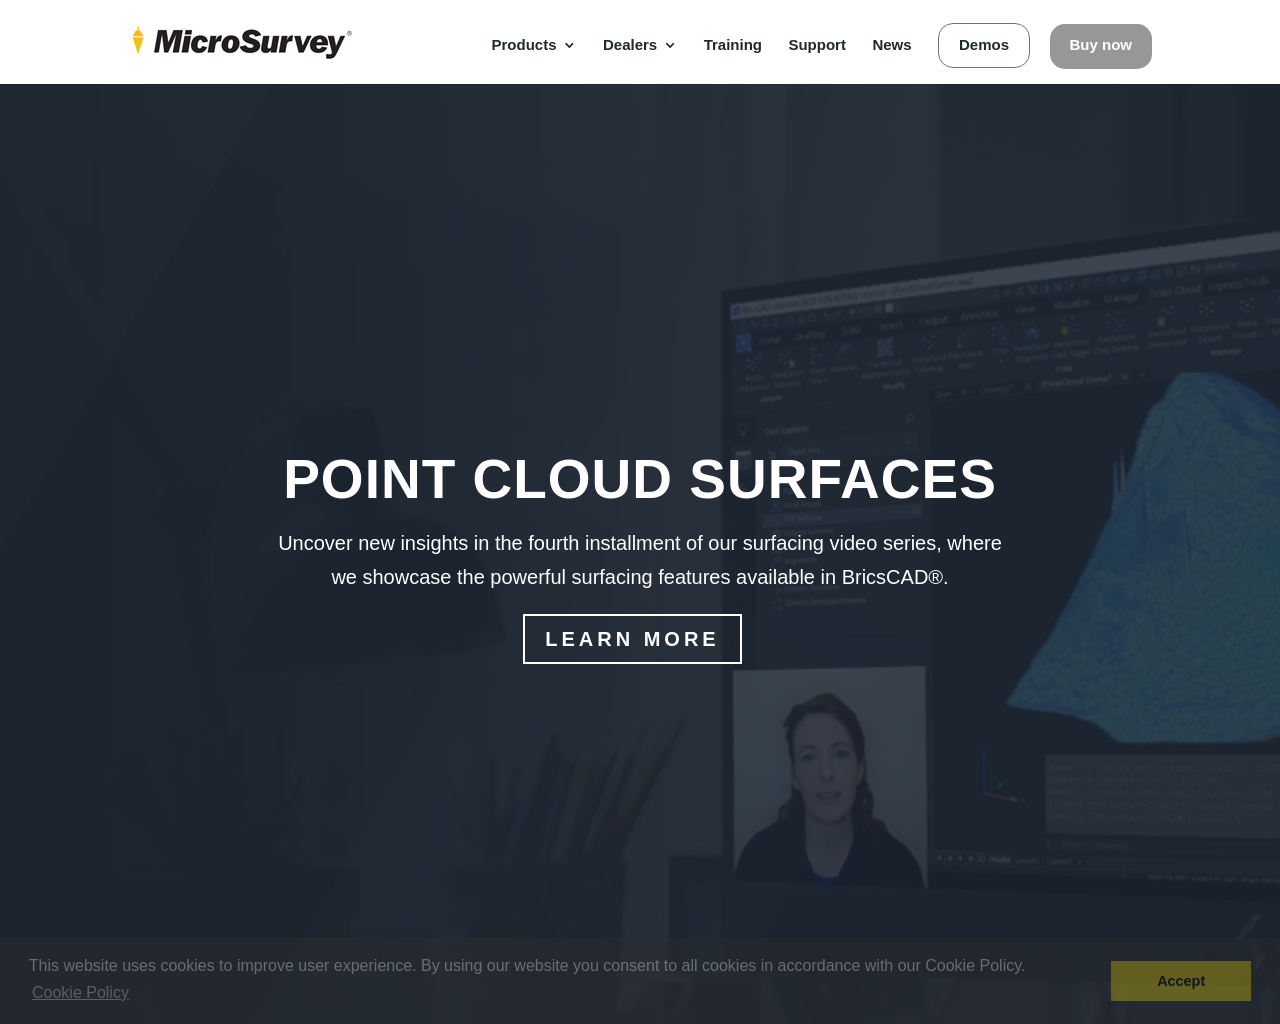 microsurvey.com